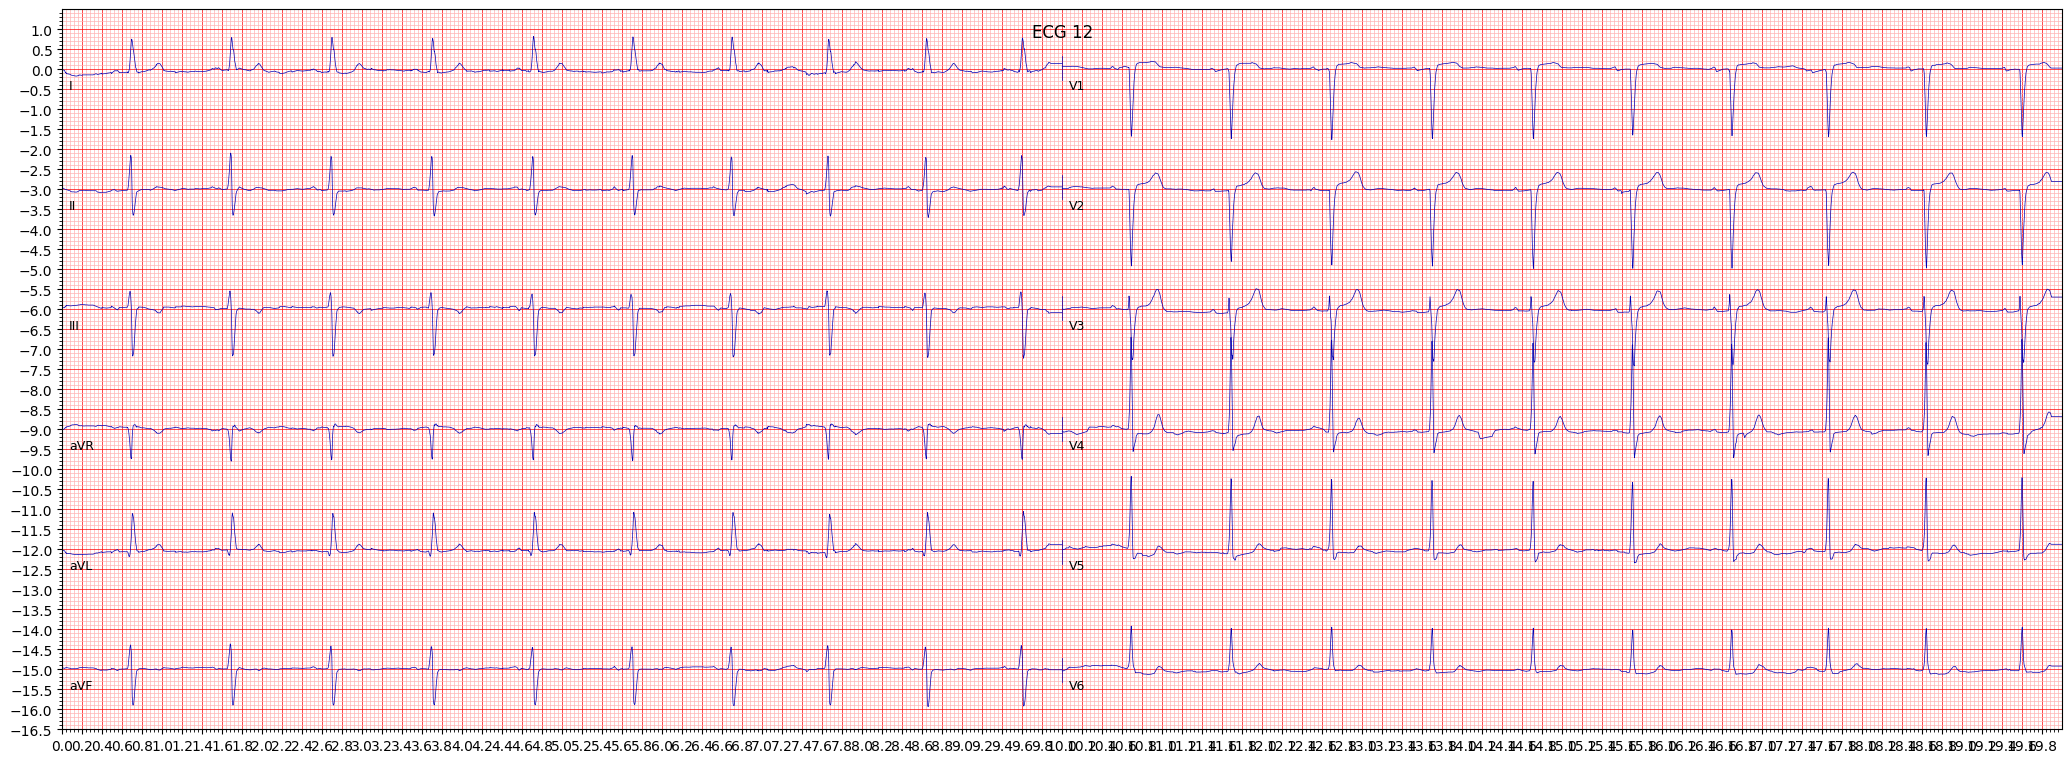 anterior myocardial infarction (AMI) example 5862